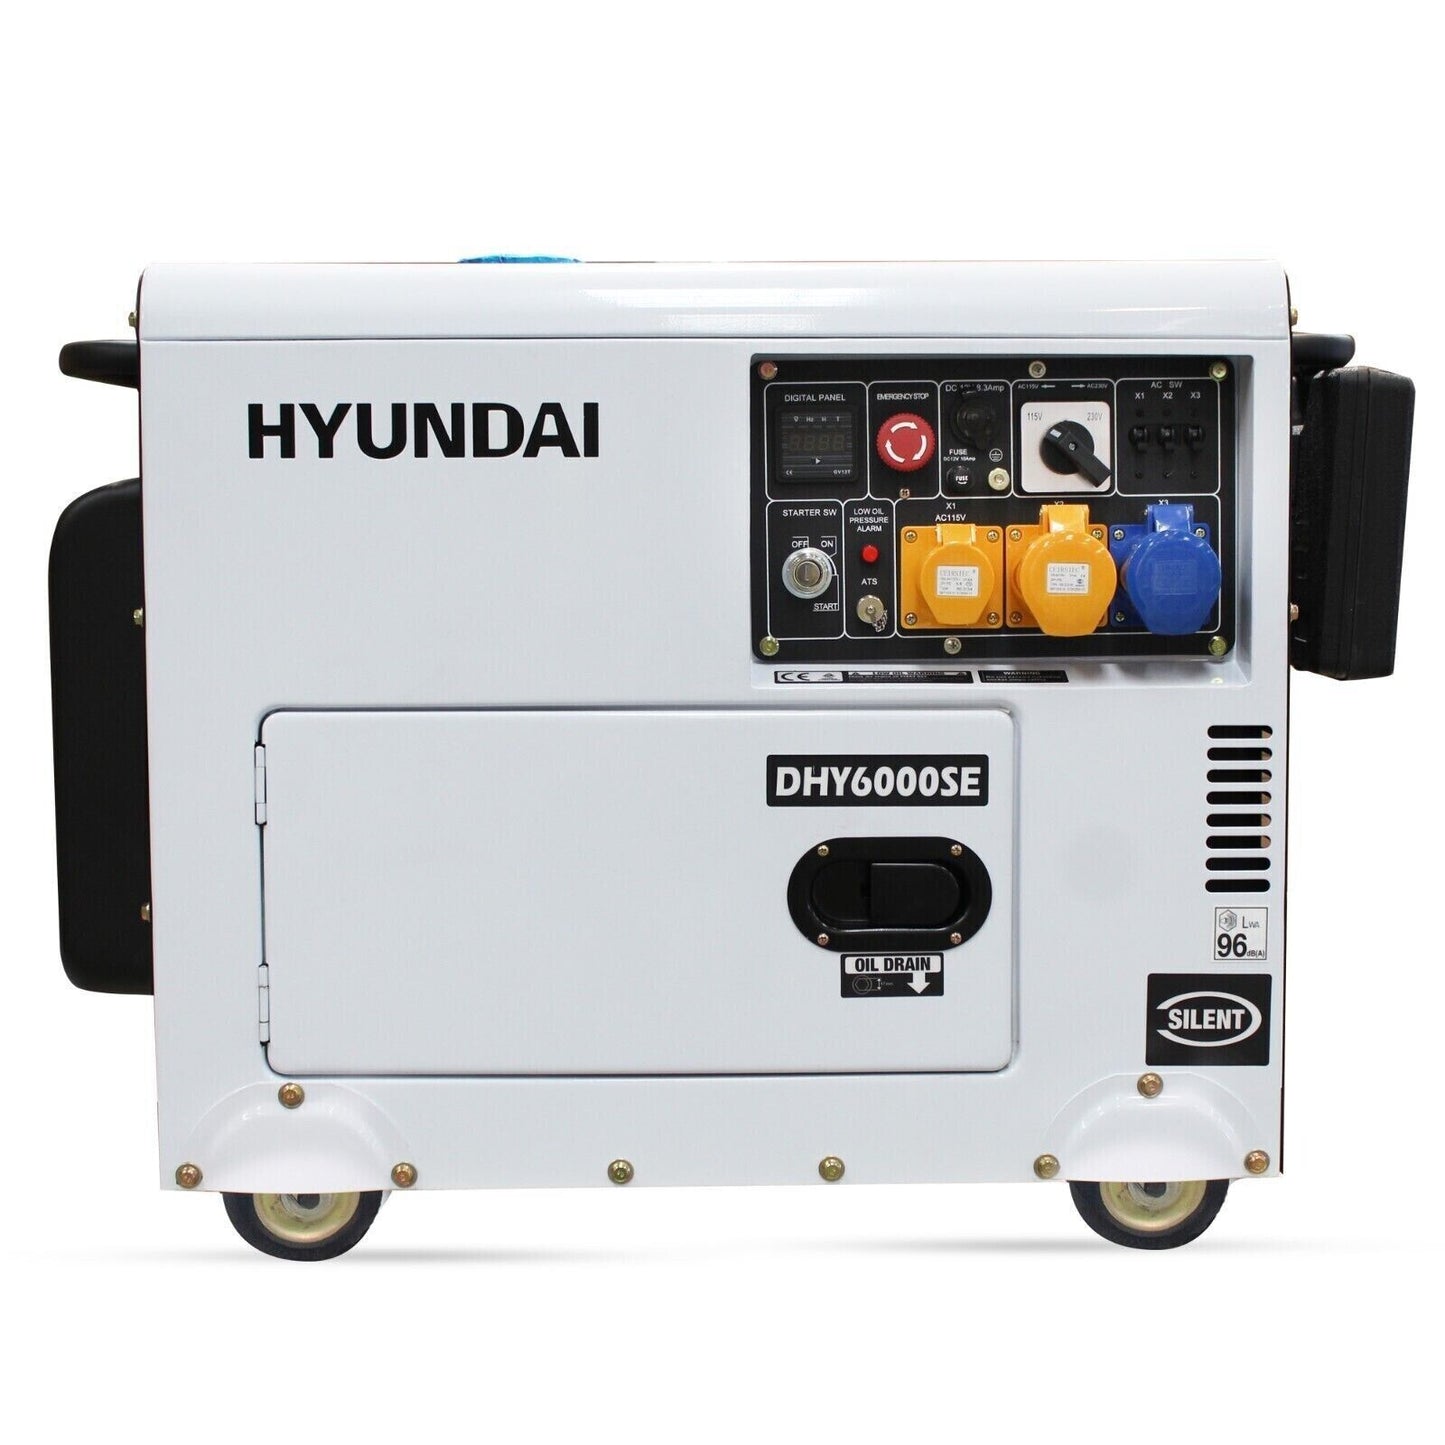 Hyundai Grade A DHY6000SE 5.2kW ?Silent? Standby Diesel Generator ECO AVR